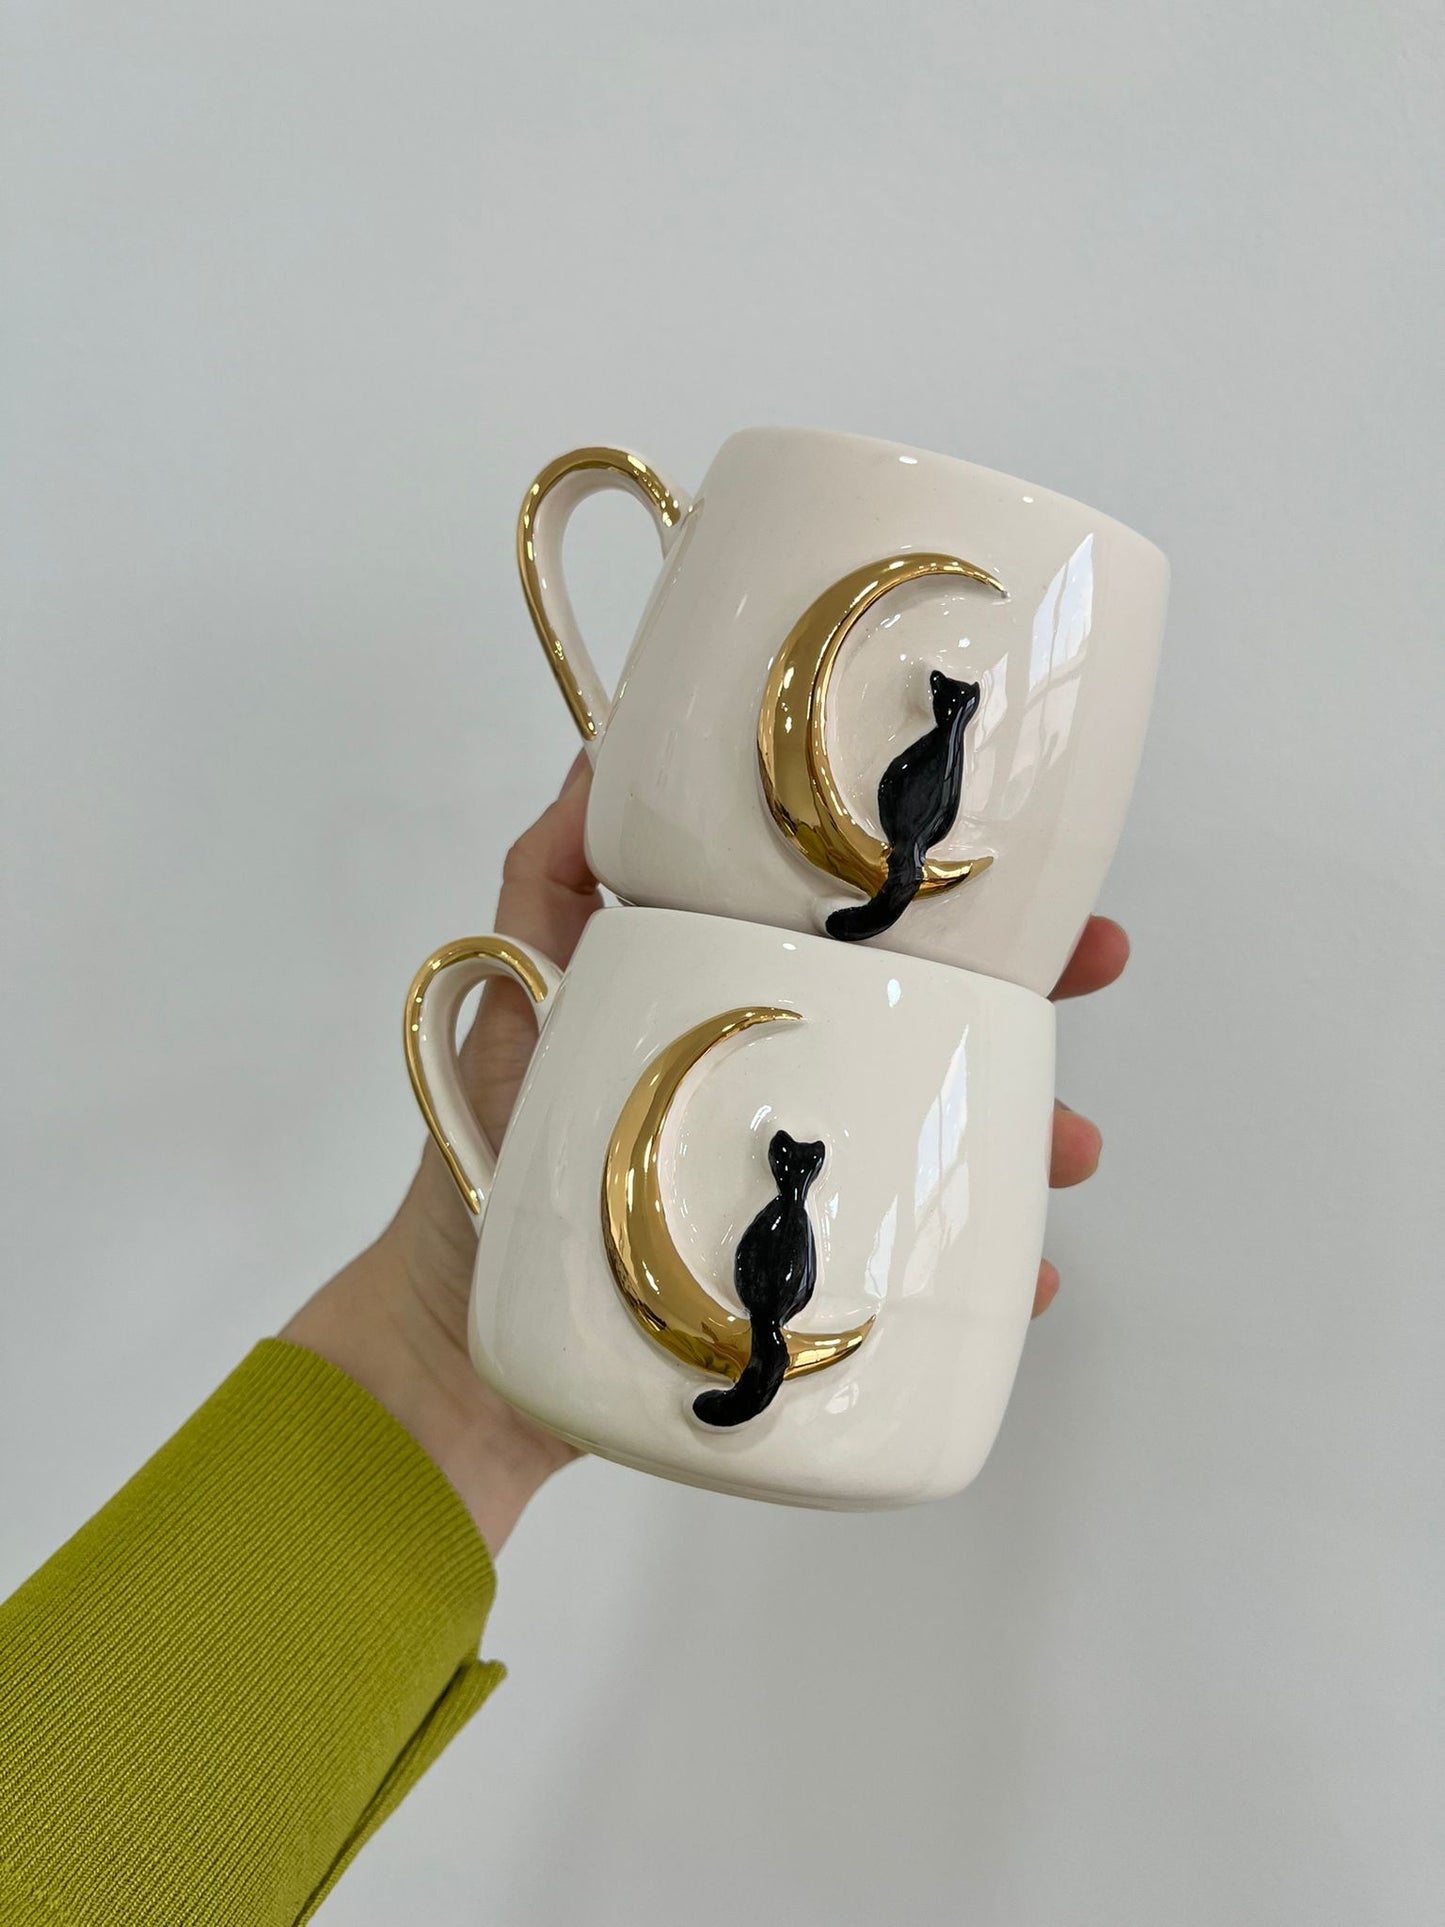 Handmade 10 oz Celestial Cat Mug with Golden Handle - Elegant Drinkware